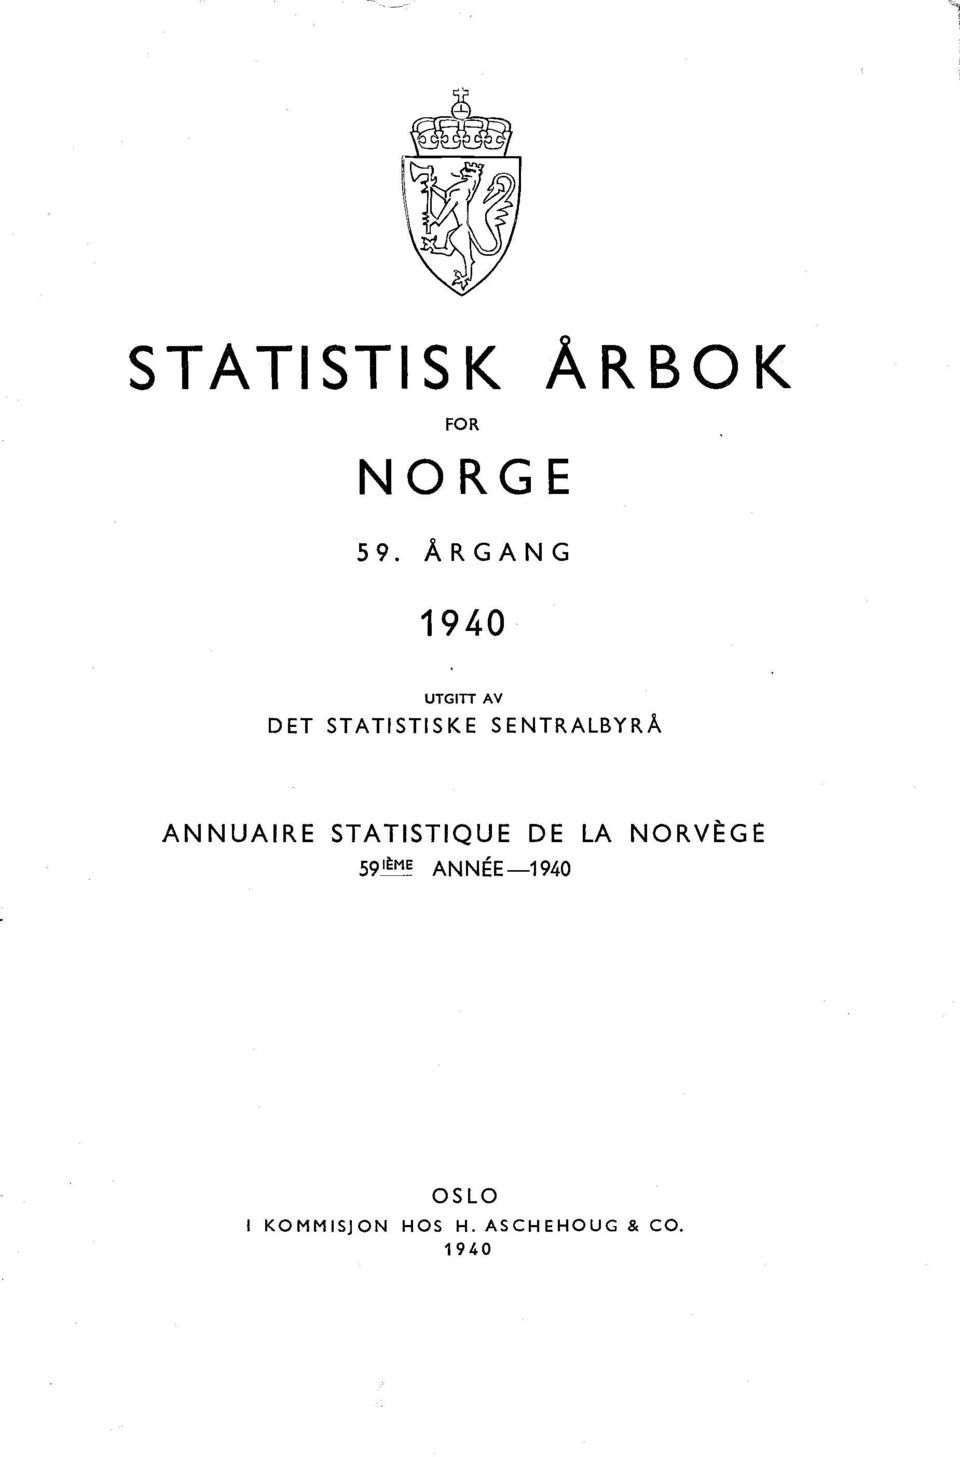 SENTRALBYRÅ ANNUAIRE STATISTIQUE DE LA